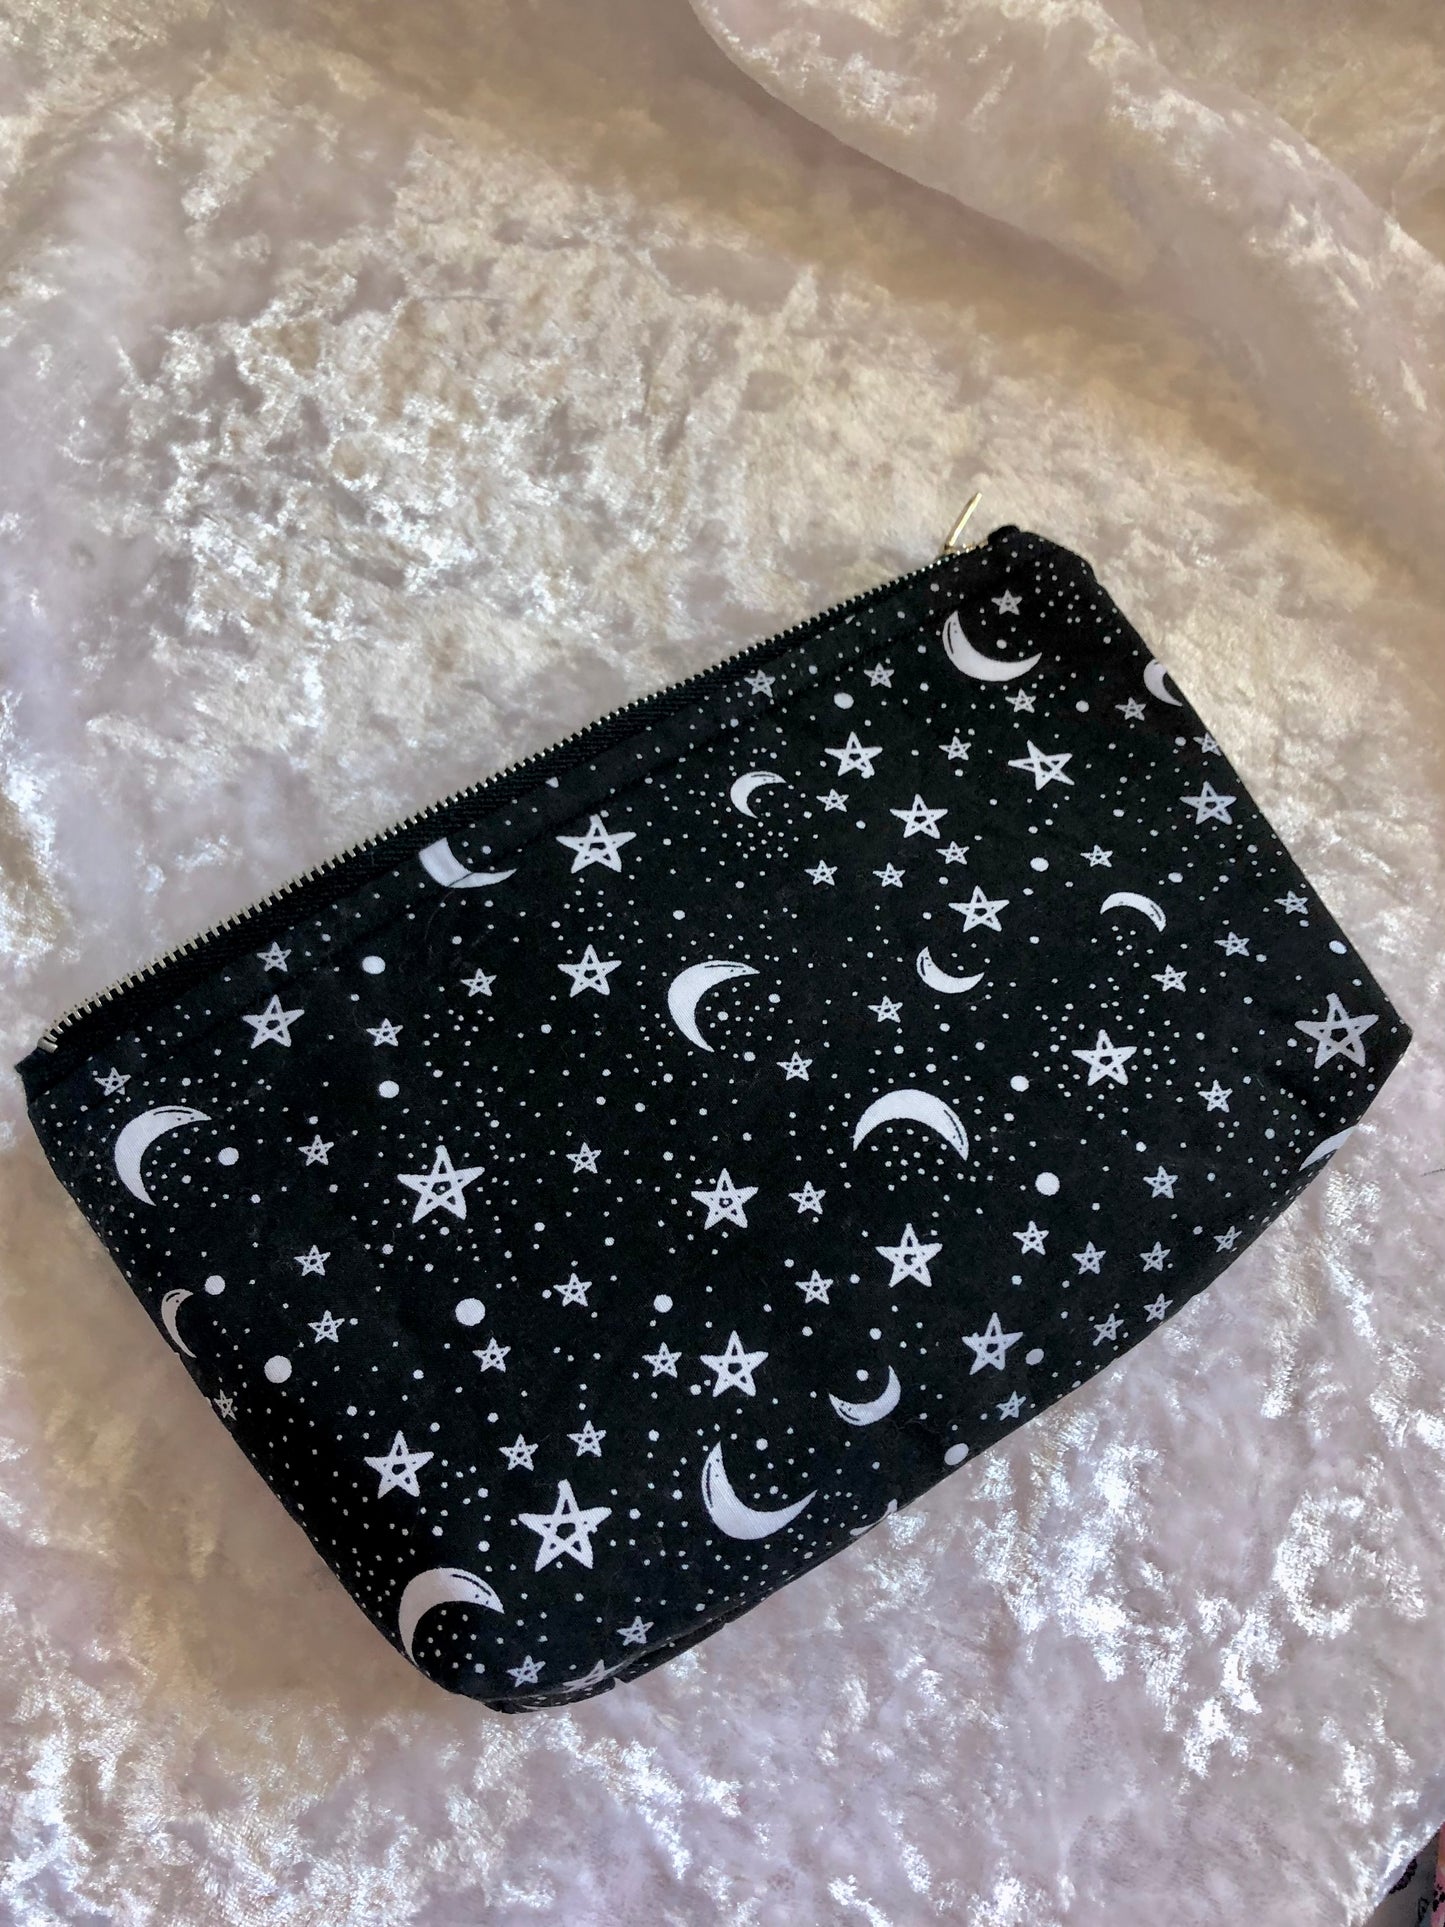 Black & white celestial print zipped pouch/make up bag